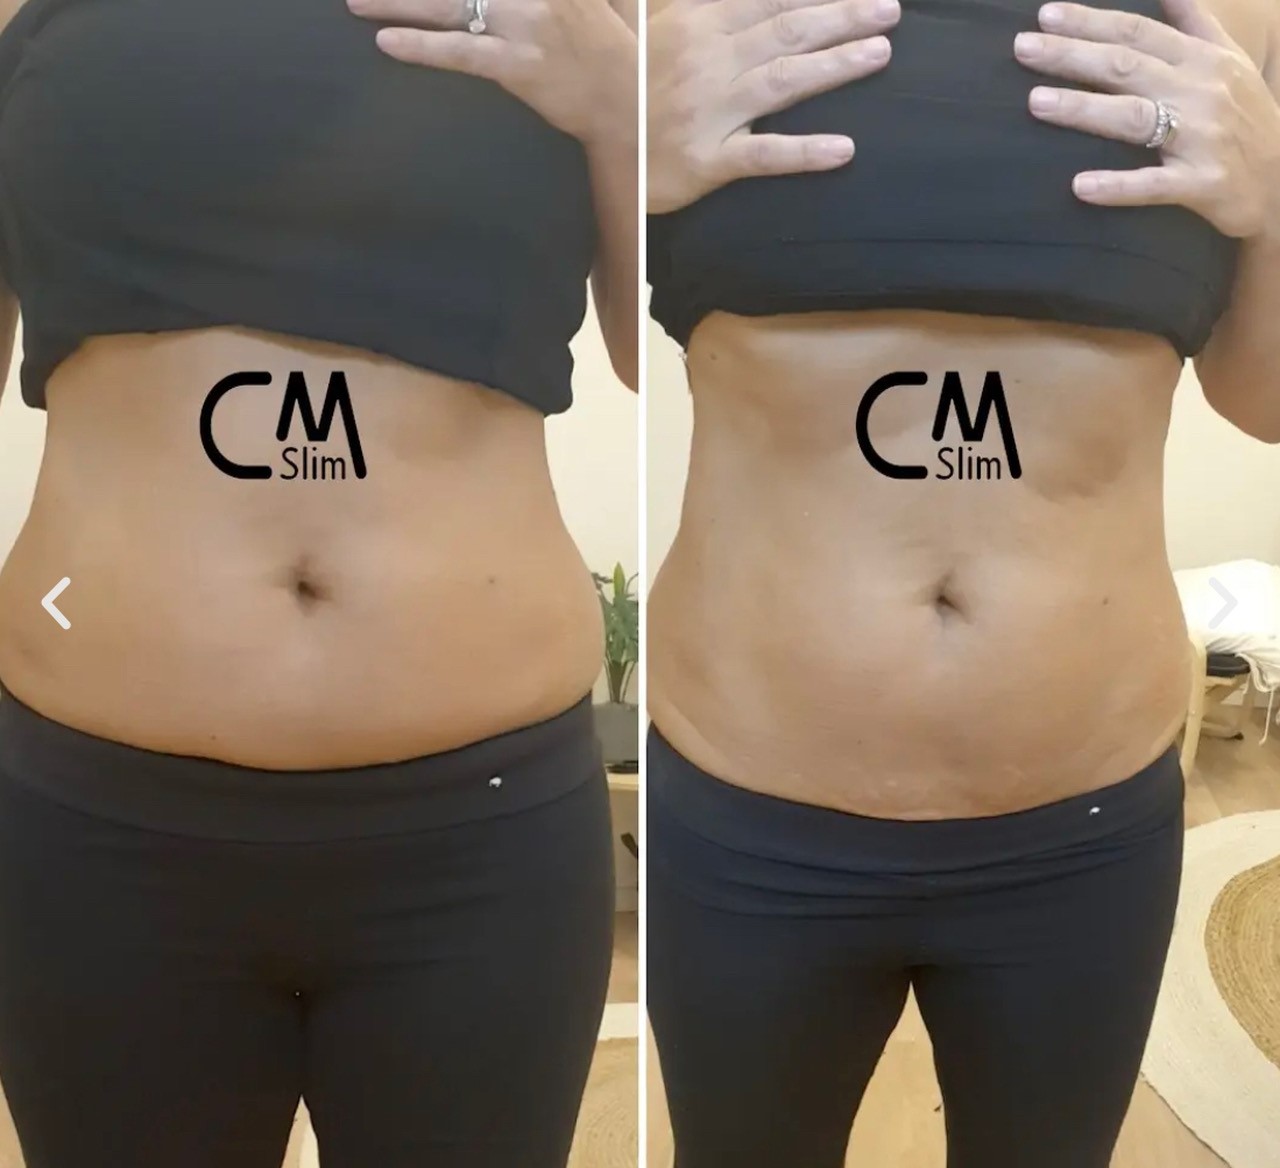 CM Slim - Body Contouring